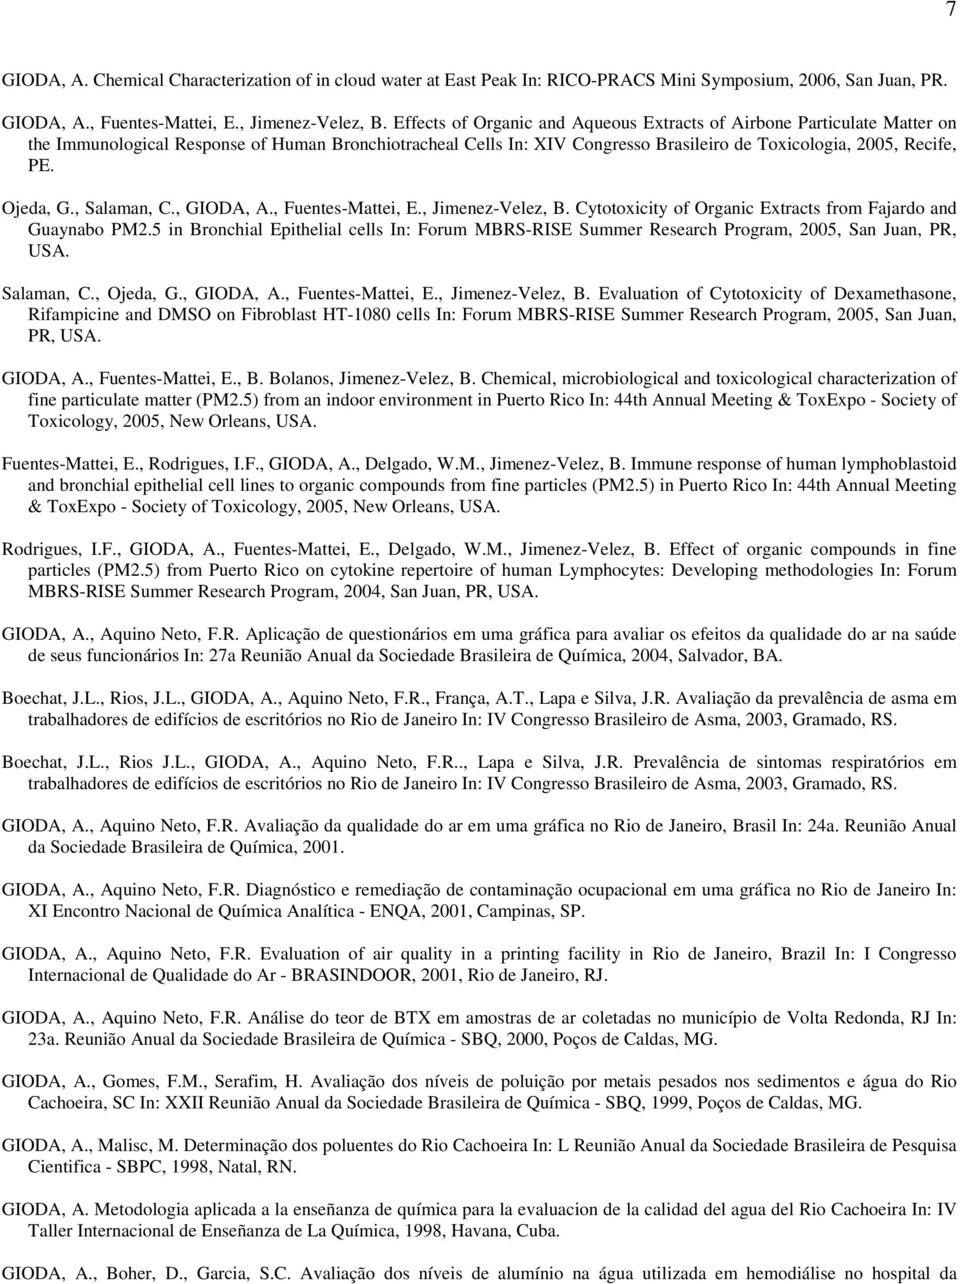 Ojeda, G., Salaman, C., GIODA, A., Fuentes-Mattei, E., Jimenez-Velez, B. Cytotoxicity of Organic Extracts from Fajardo and Guaynabo PM2.